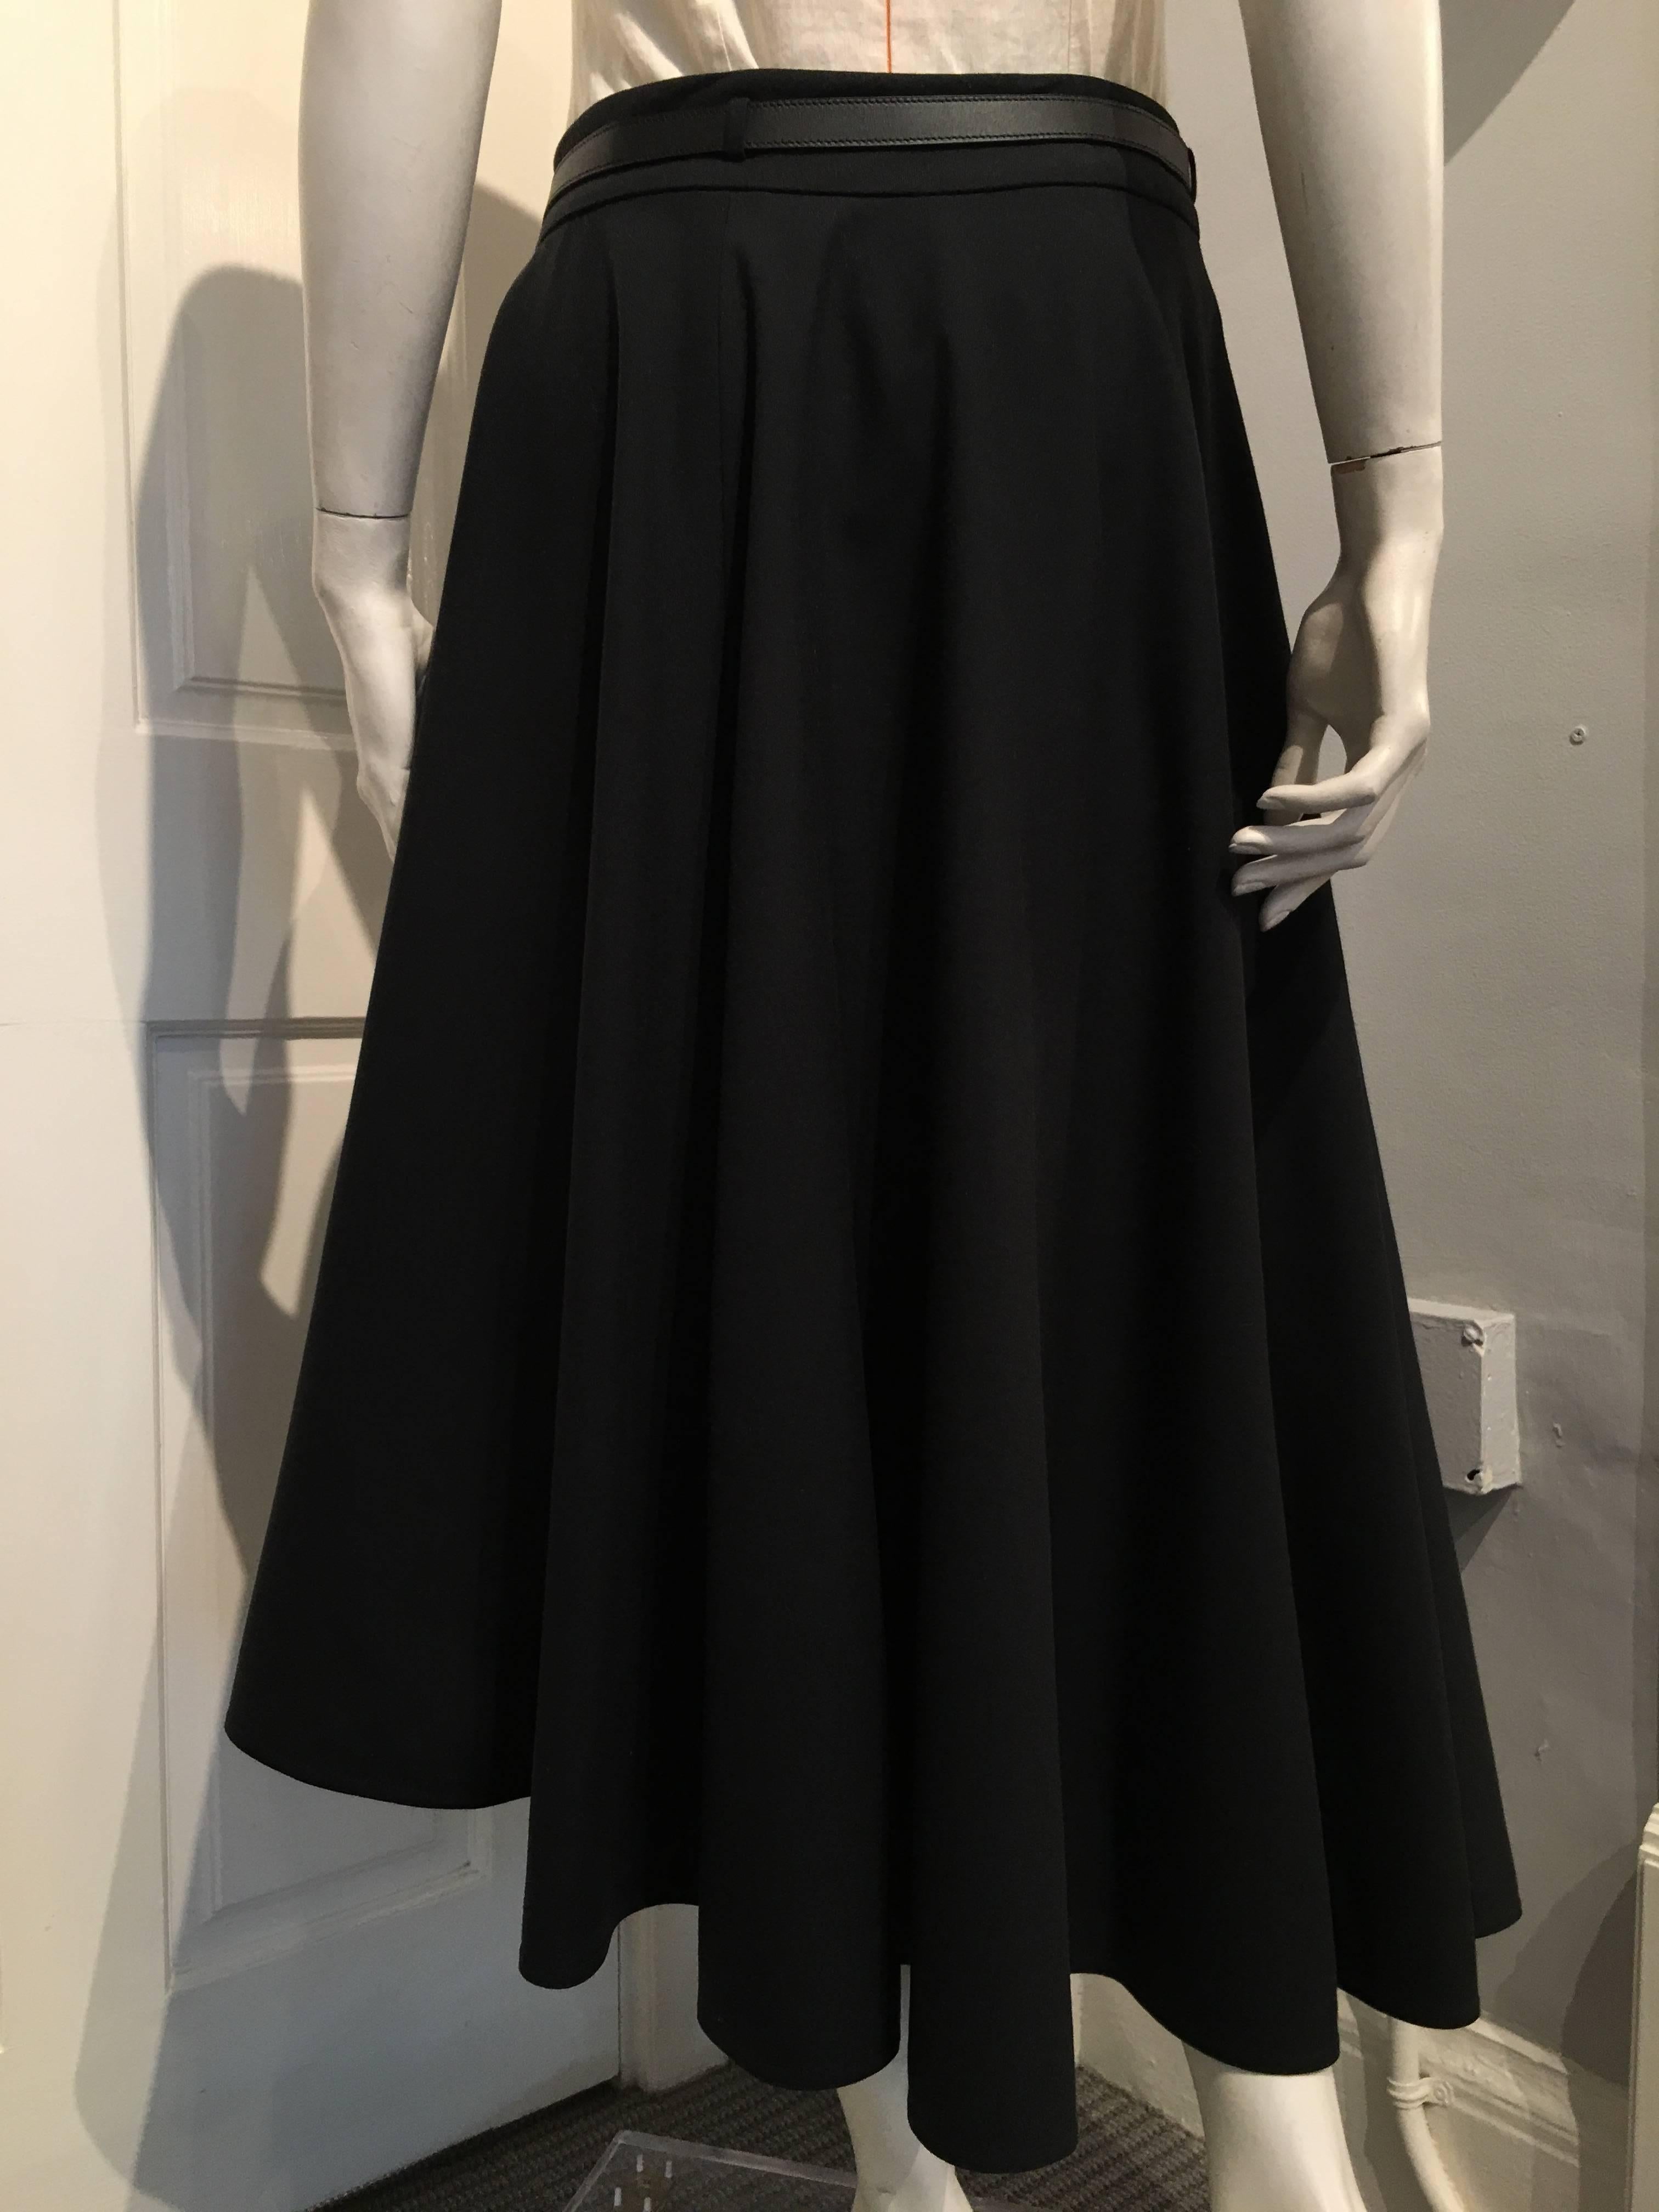 Women's Hermes Black Wool Asymmetrical Wrap Skirt size 40 (8)